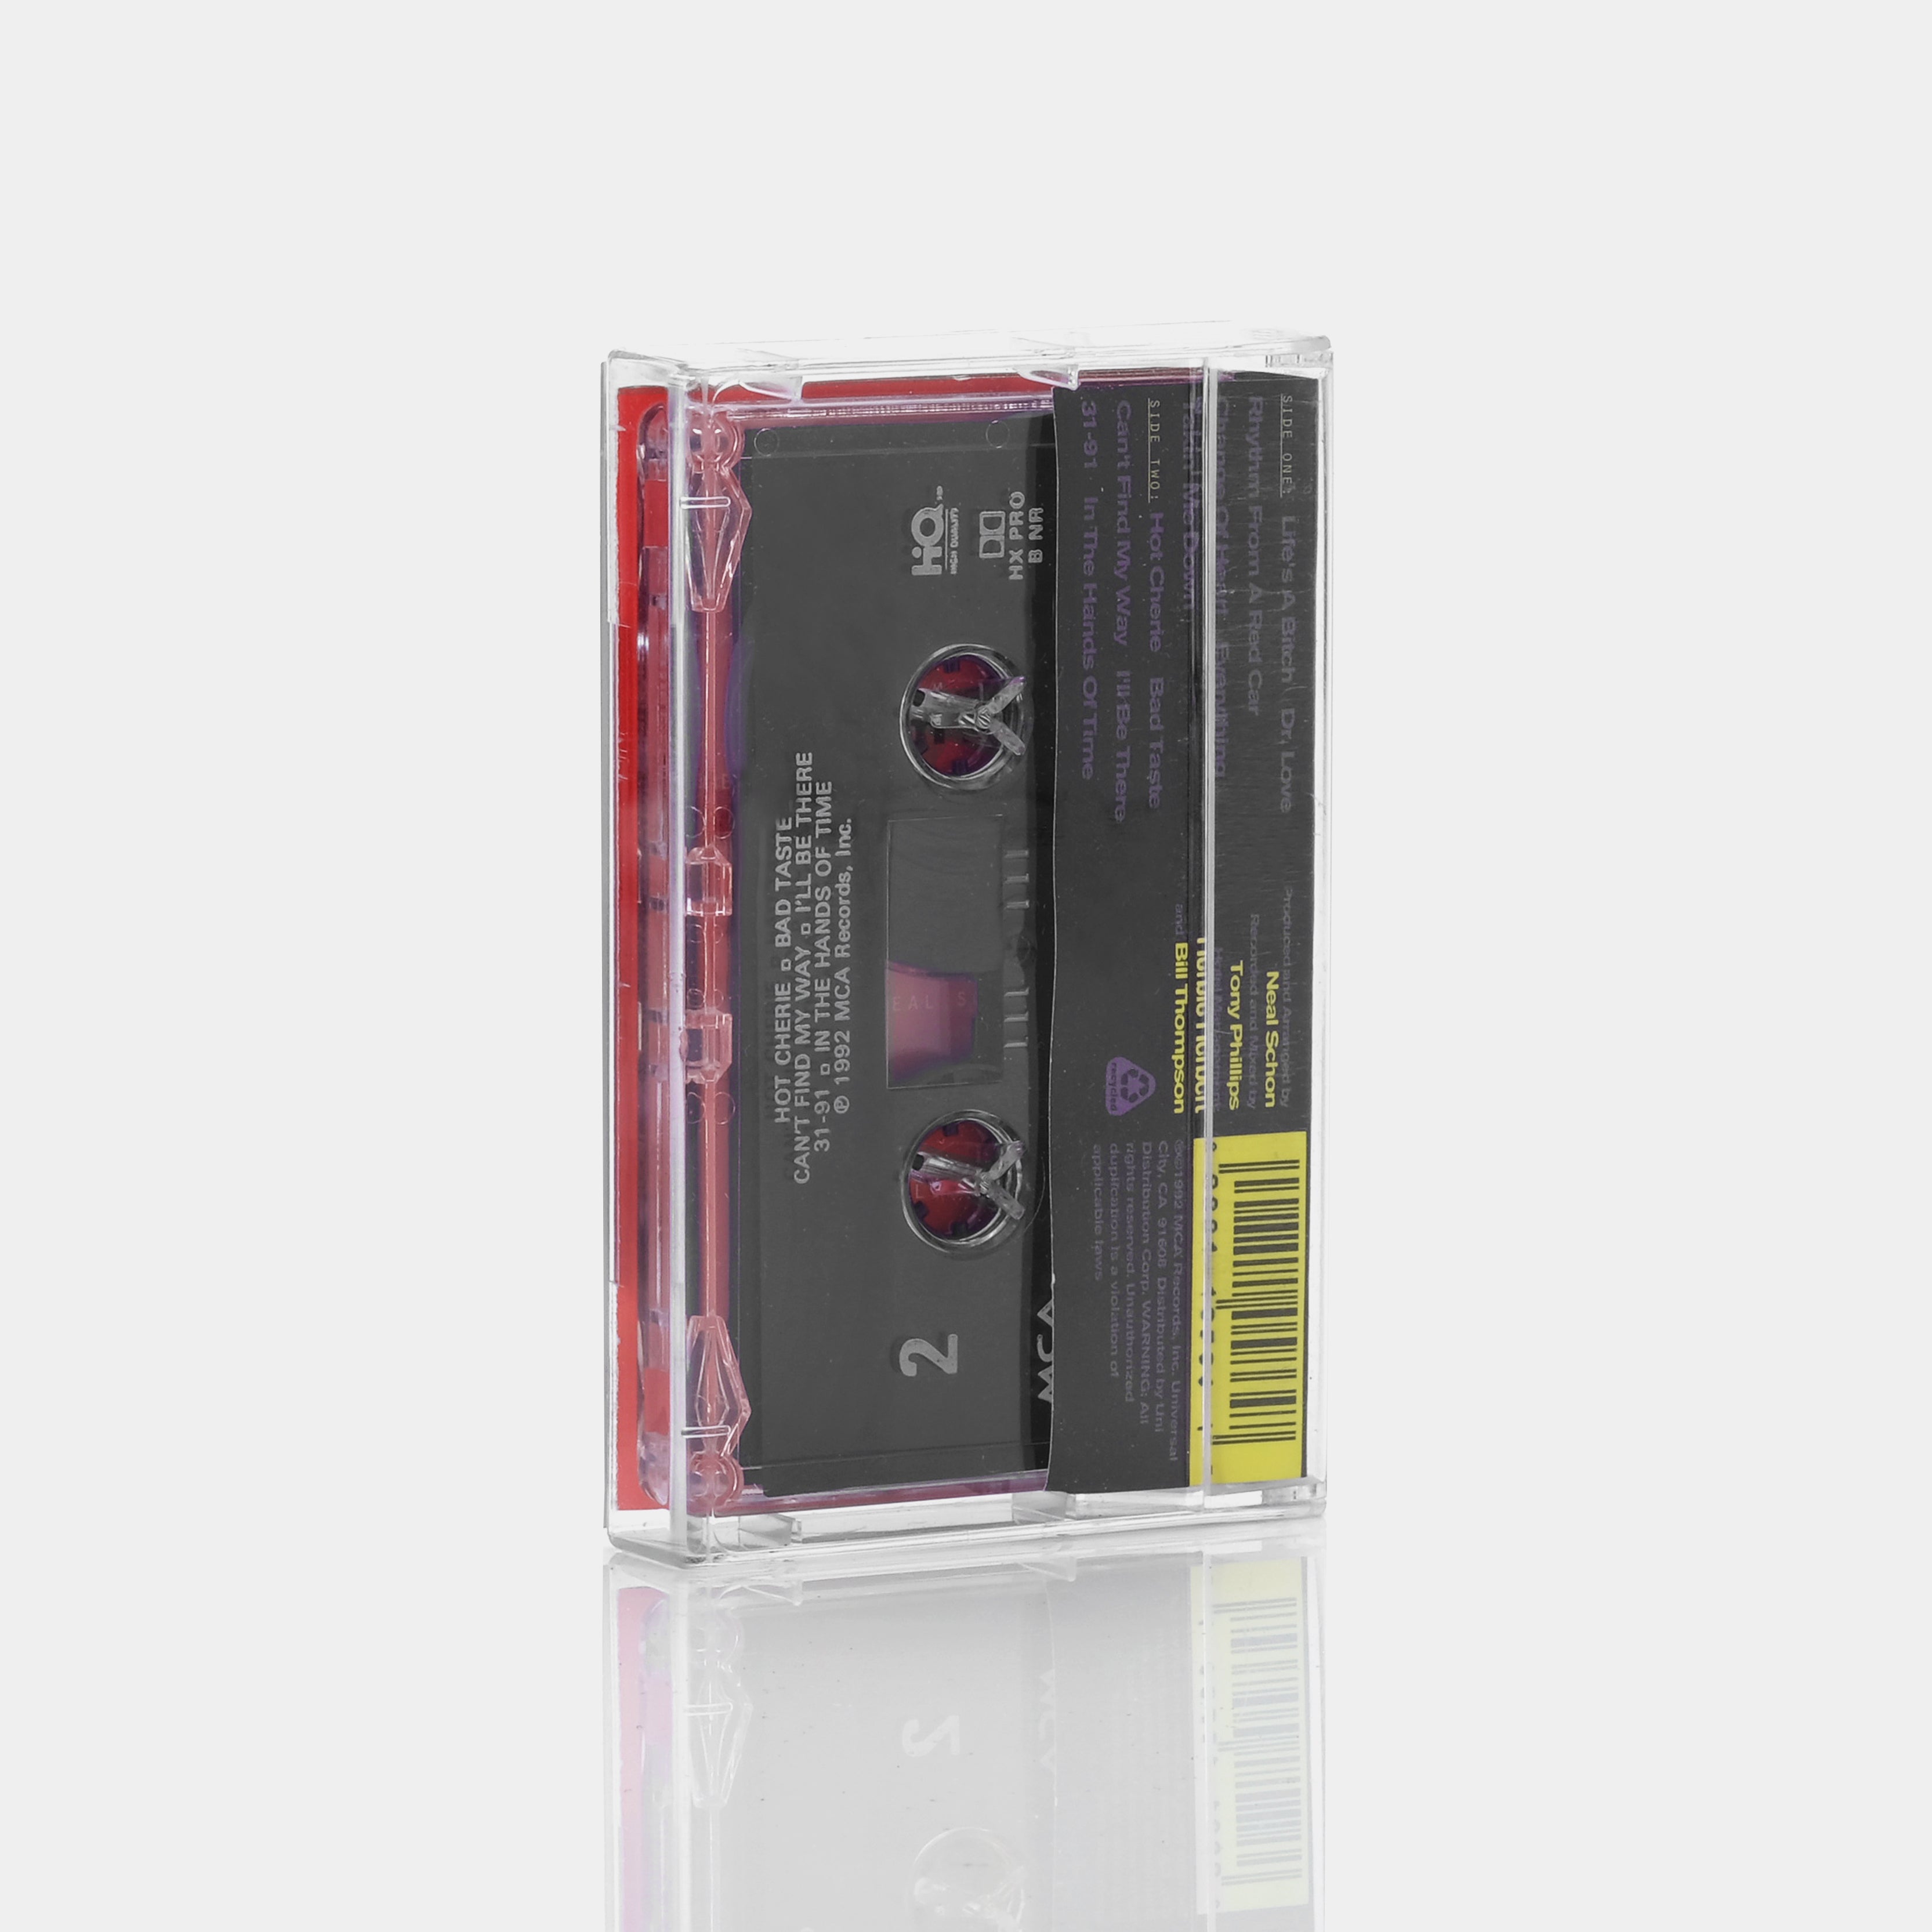 Hardline - Double Eclipse Cassette Tape